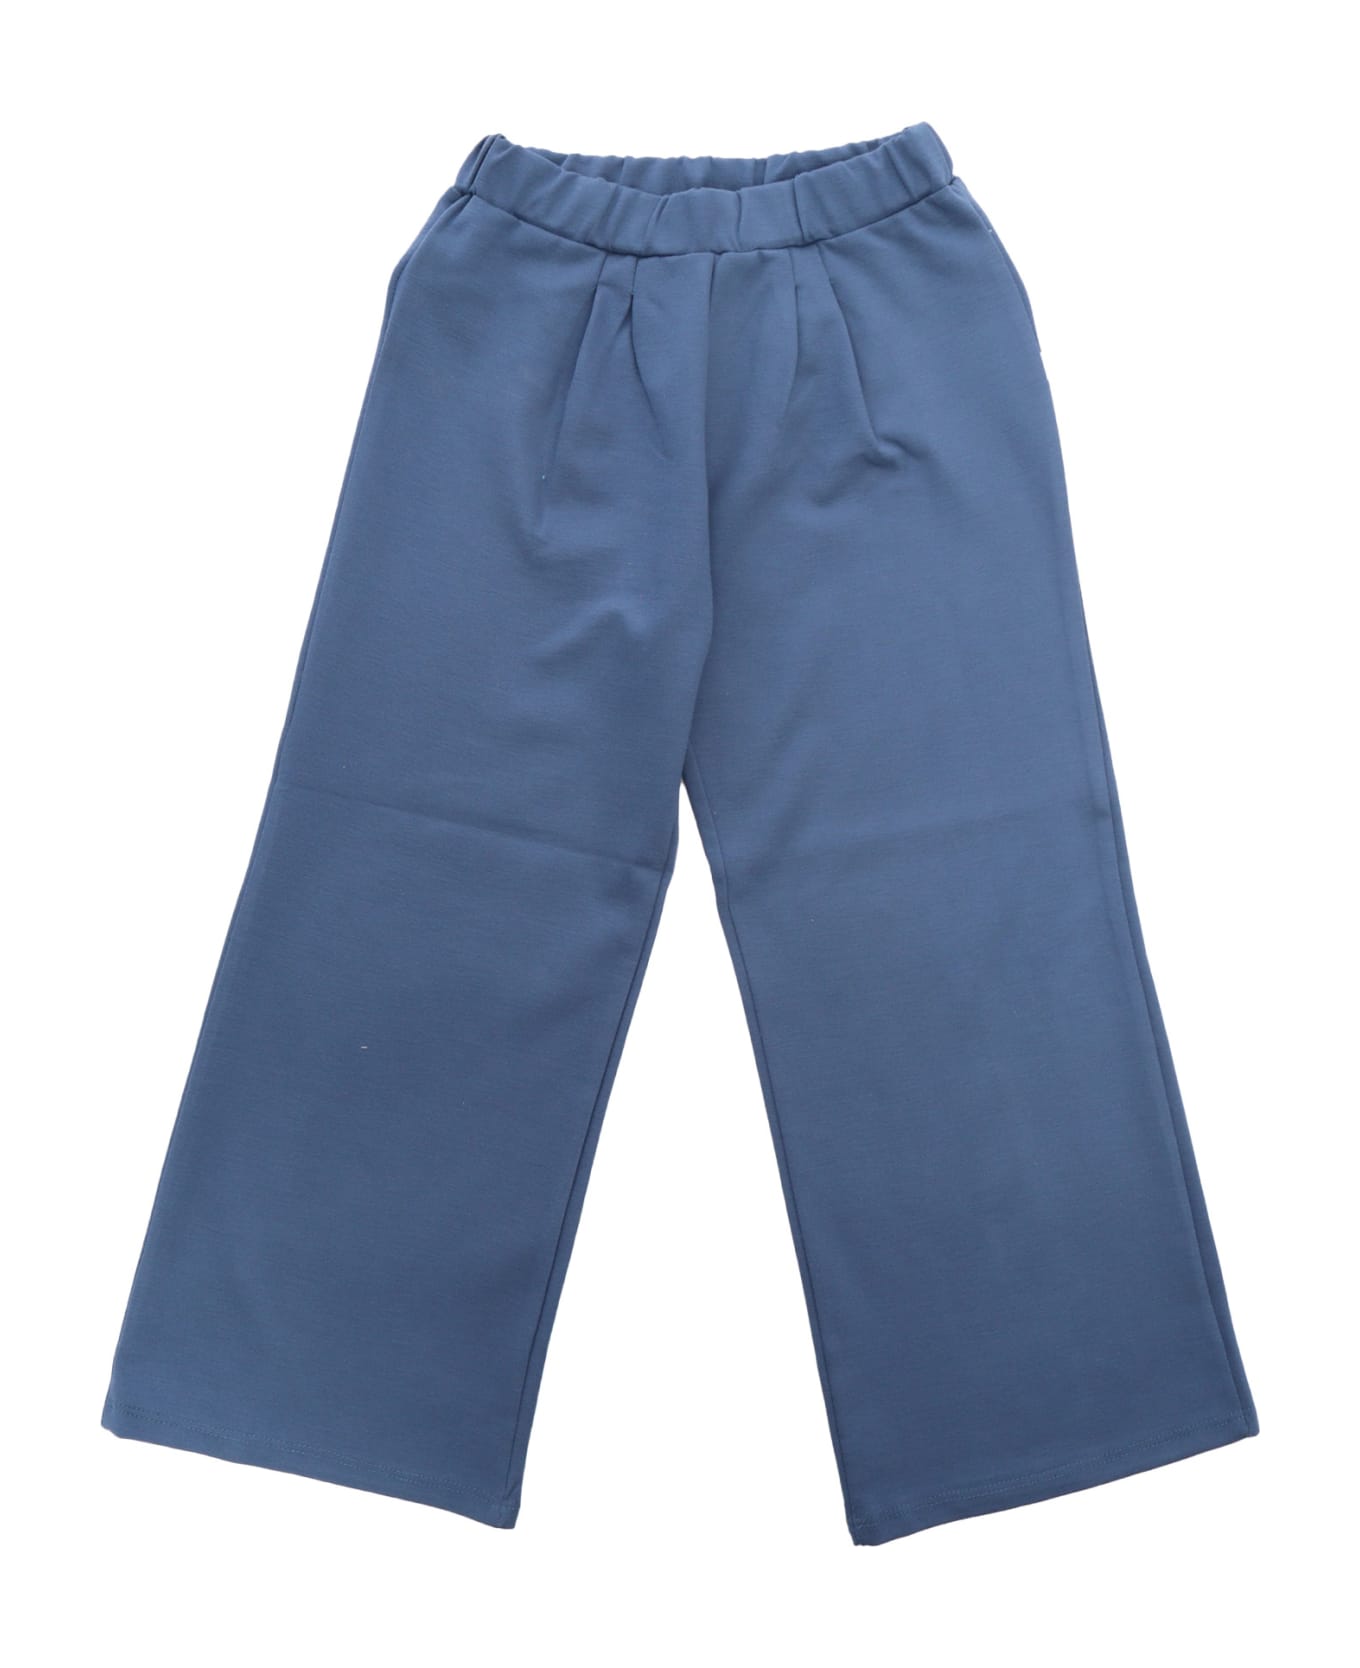 Magil Milano Stitch Gaucho Pants - LIGHT BLUE ボトムス